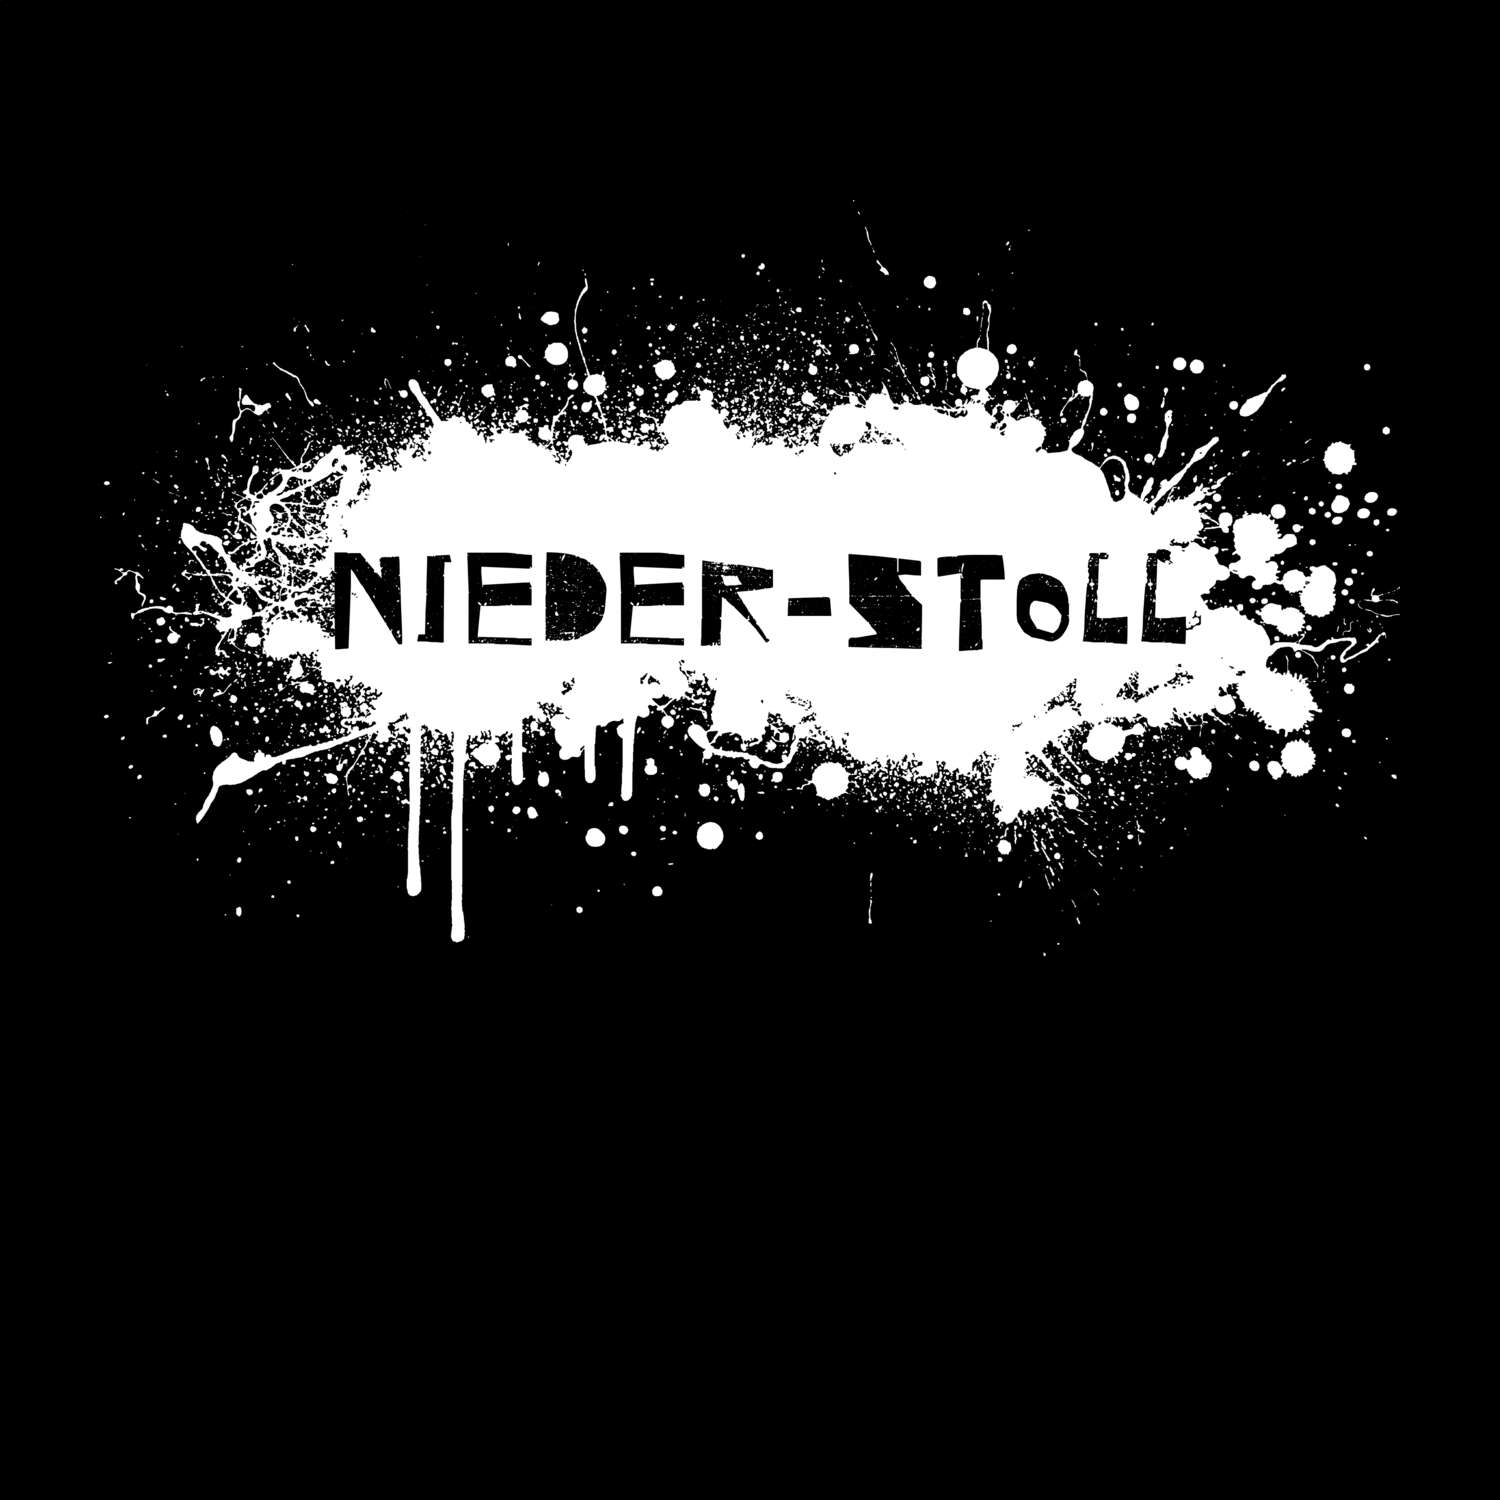 Nieder-Stoll T-Shirt »Paint Splash Punk«